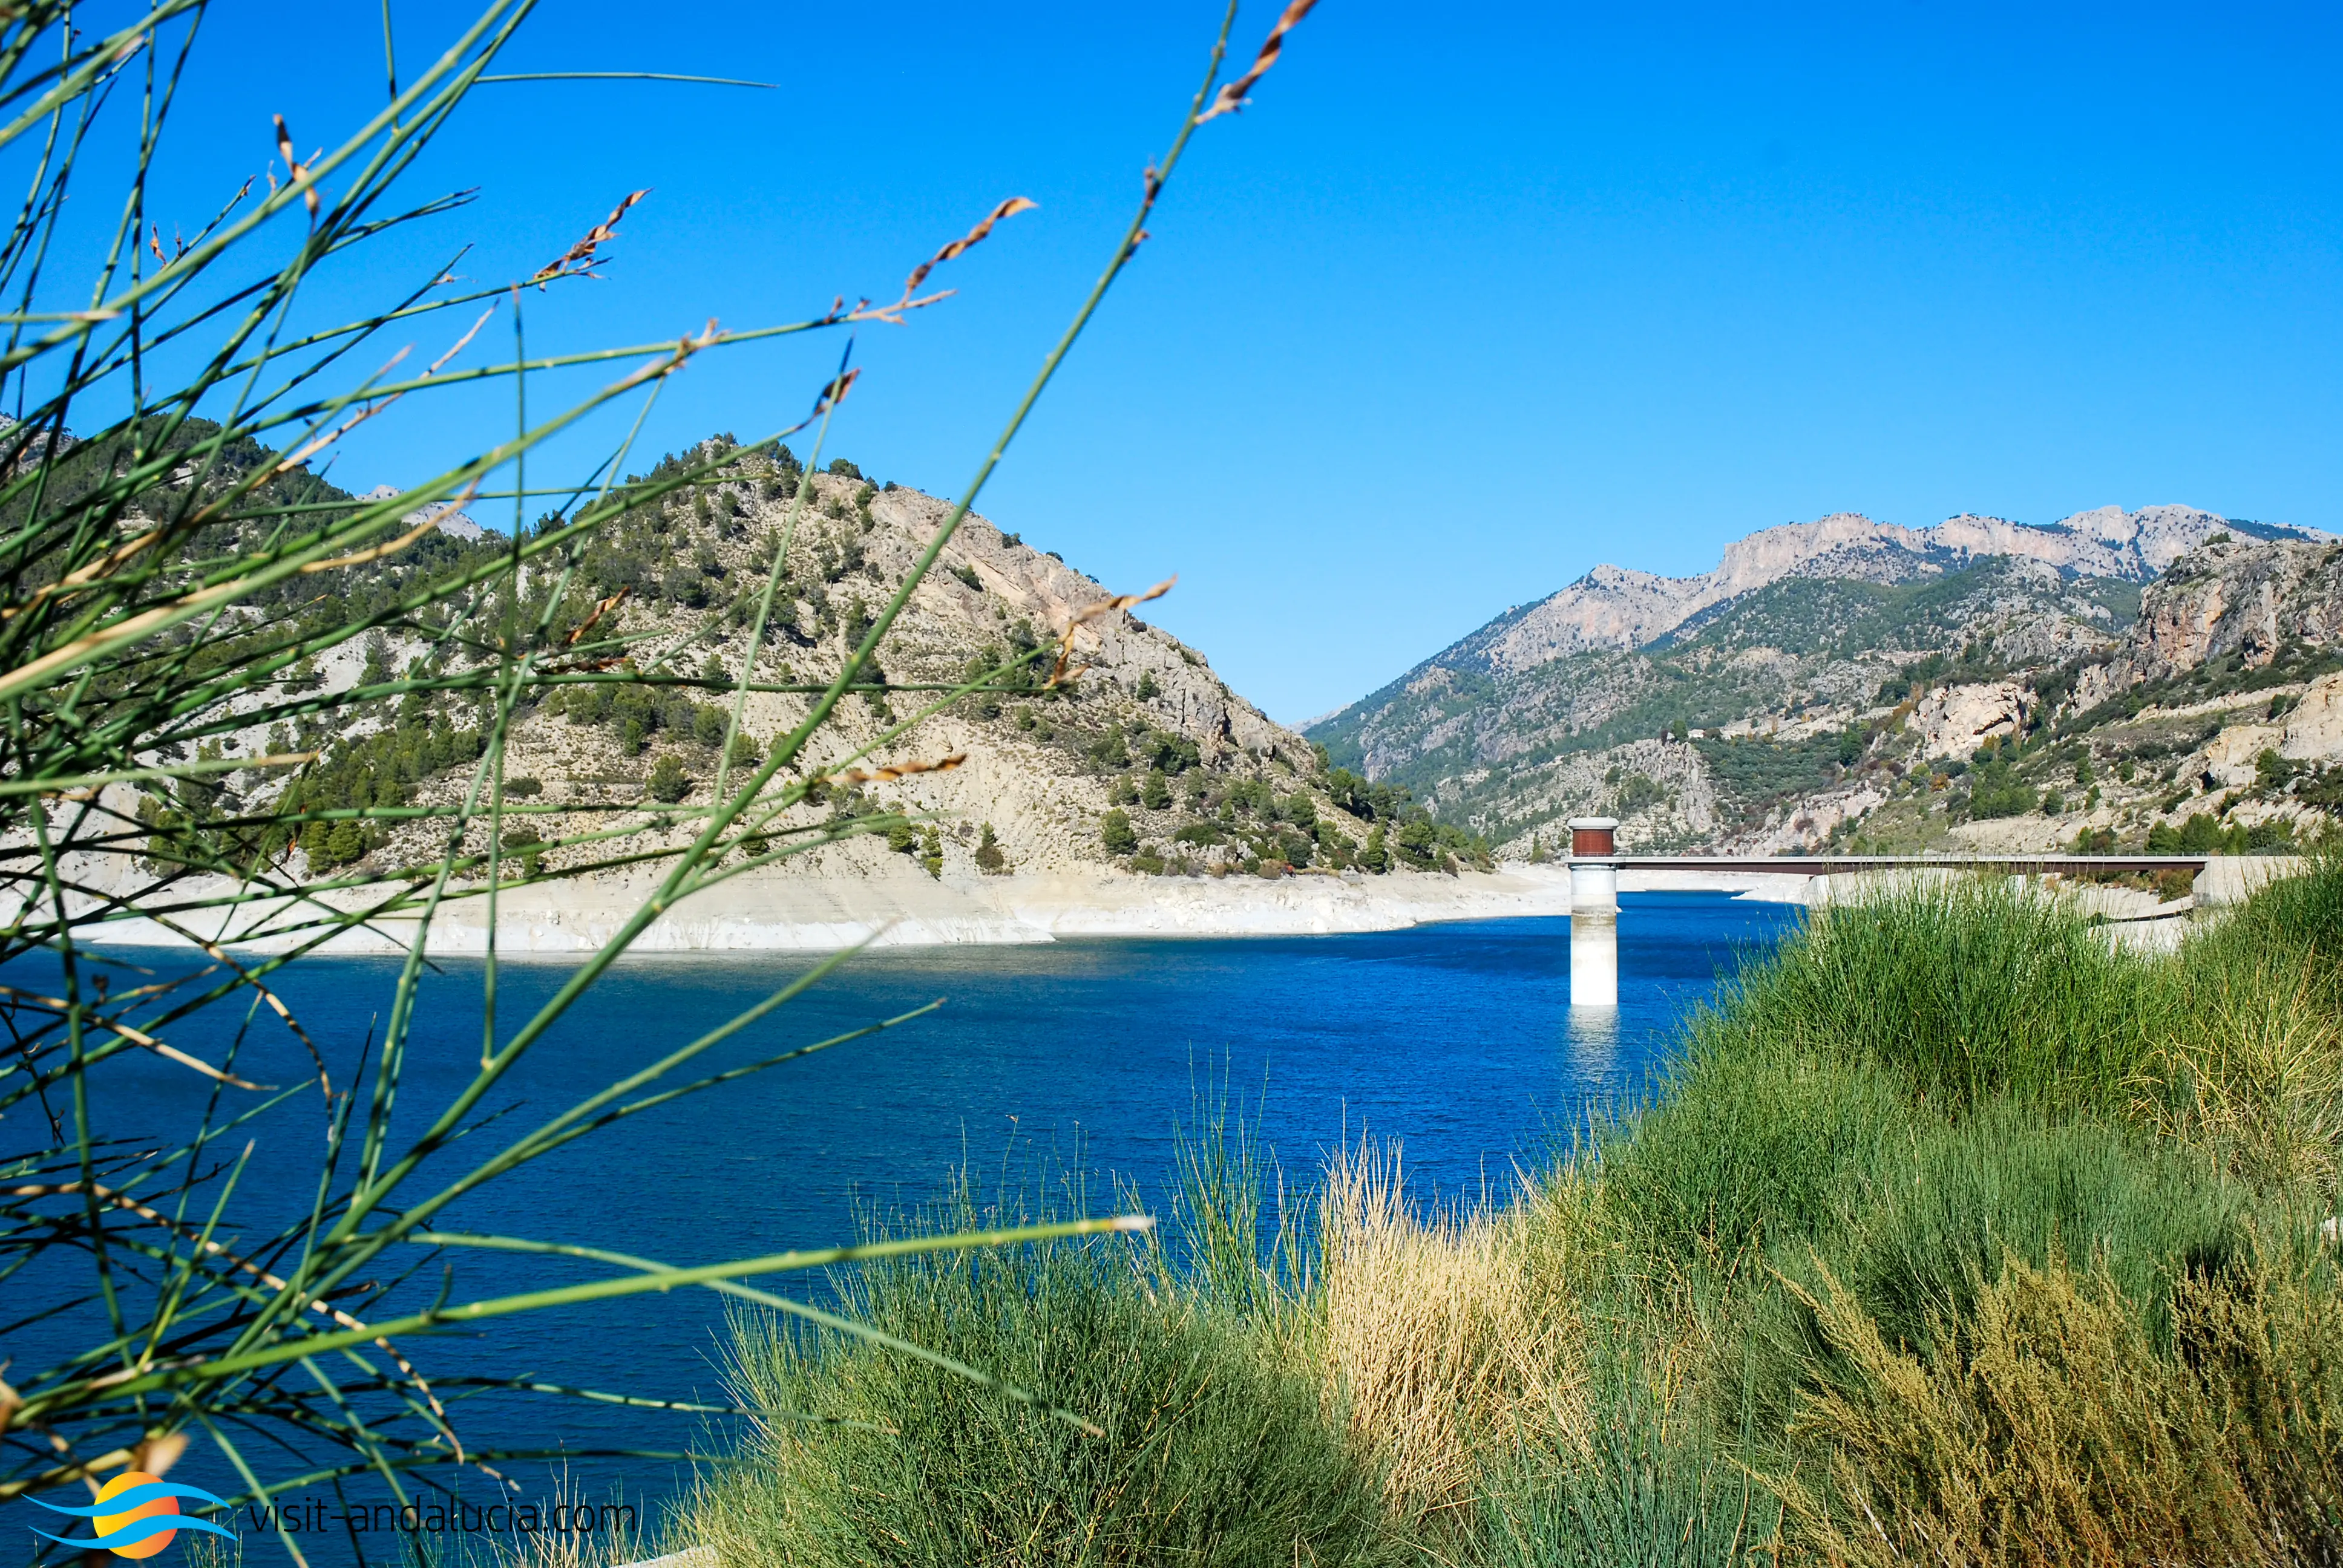 The El Portillo reservoir just outside of Castril, Granada Province